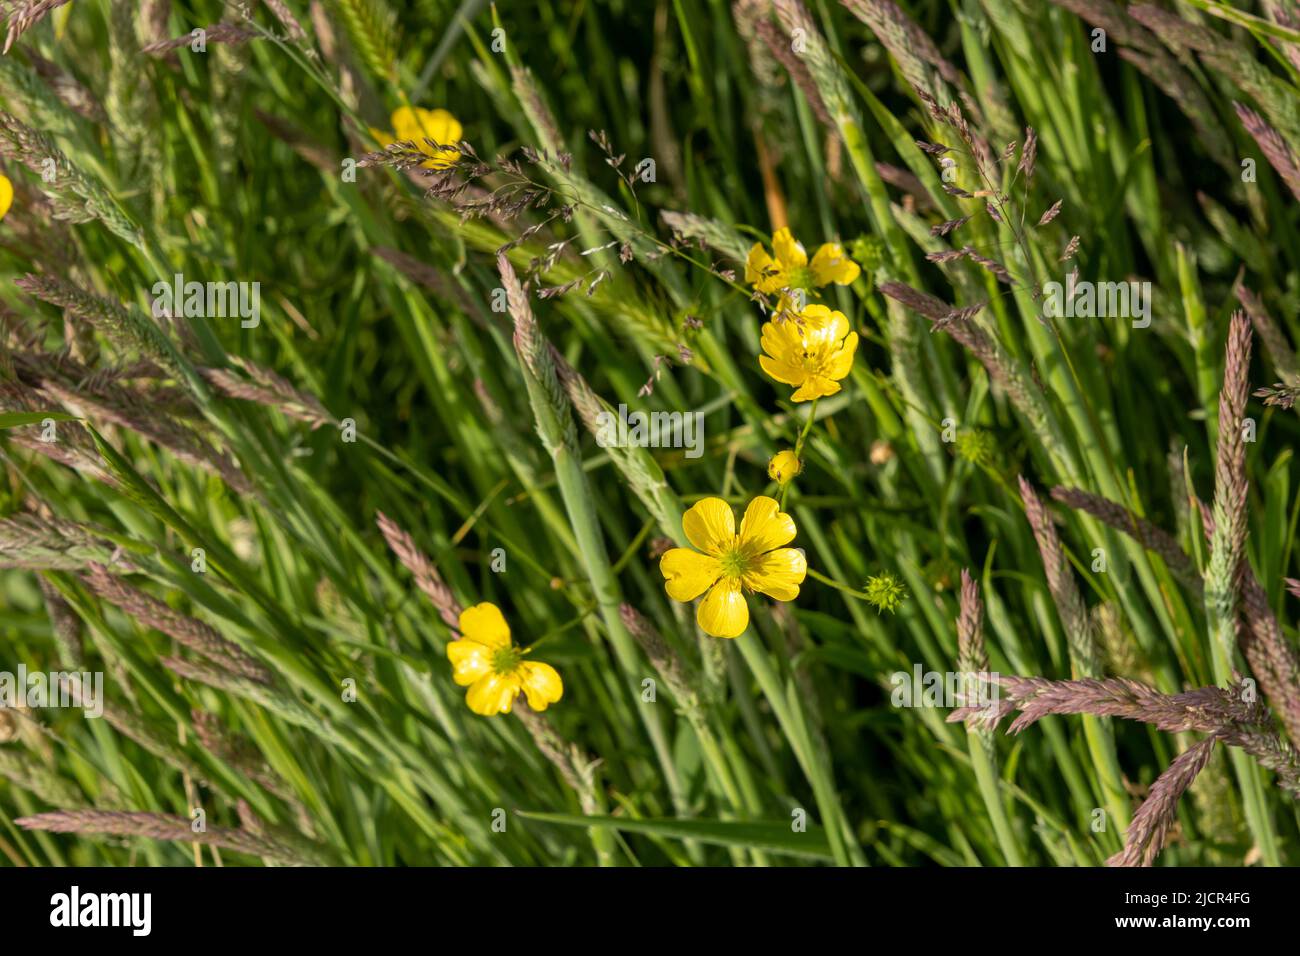 Spearwort (also known as Lesser spearwort or Banewort) flowers amongst grasses Stock Photo